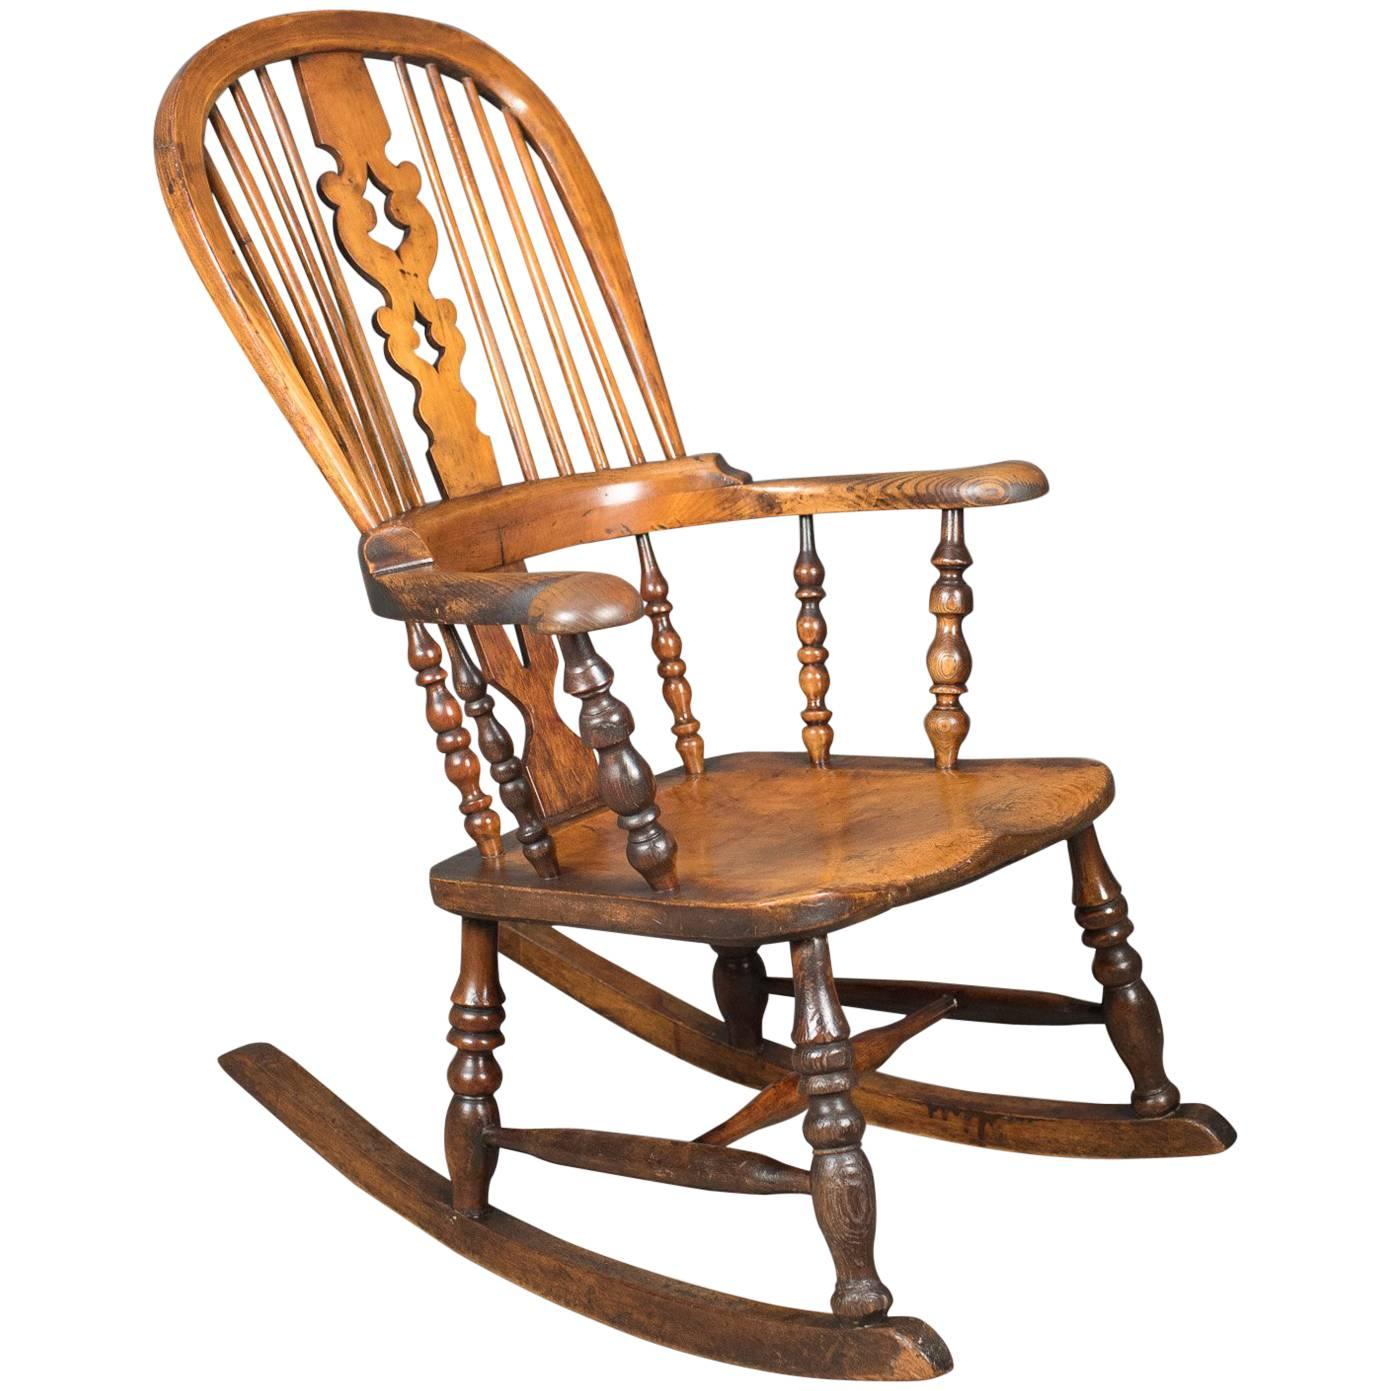 Victorian Antique Windsor Rocking Chair, English Armchair, Yorkshire, circa 1850